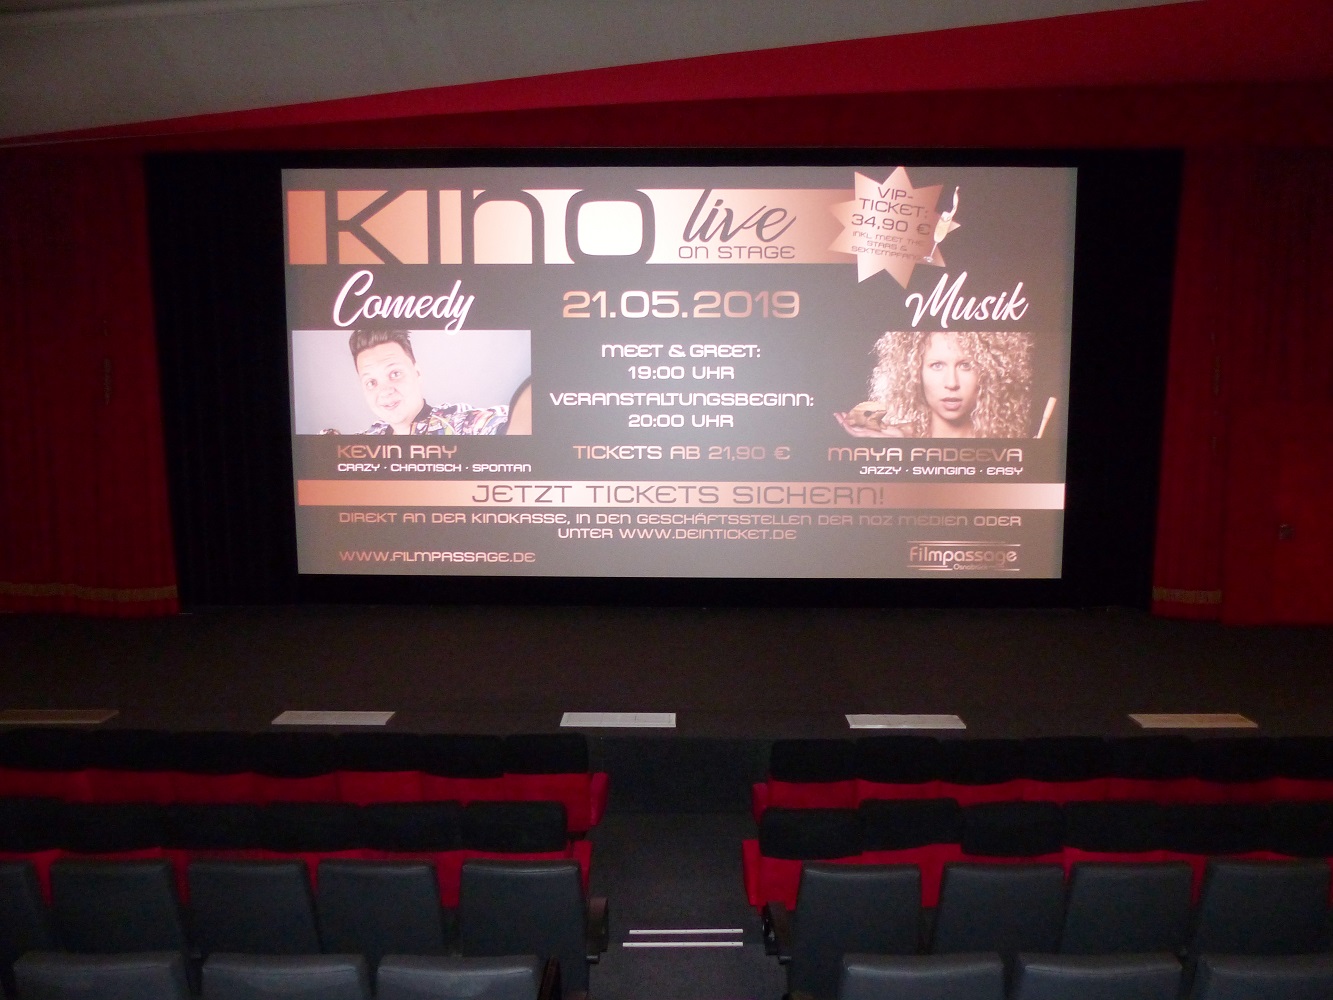 Filmpassage, Kino live on Stage